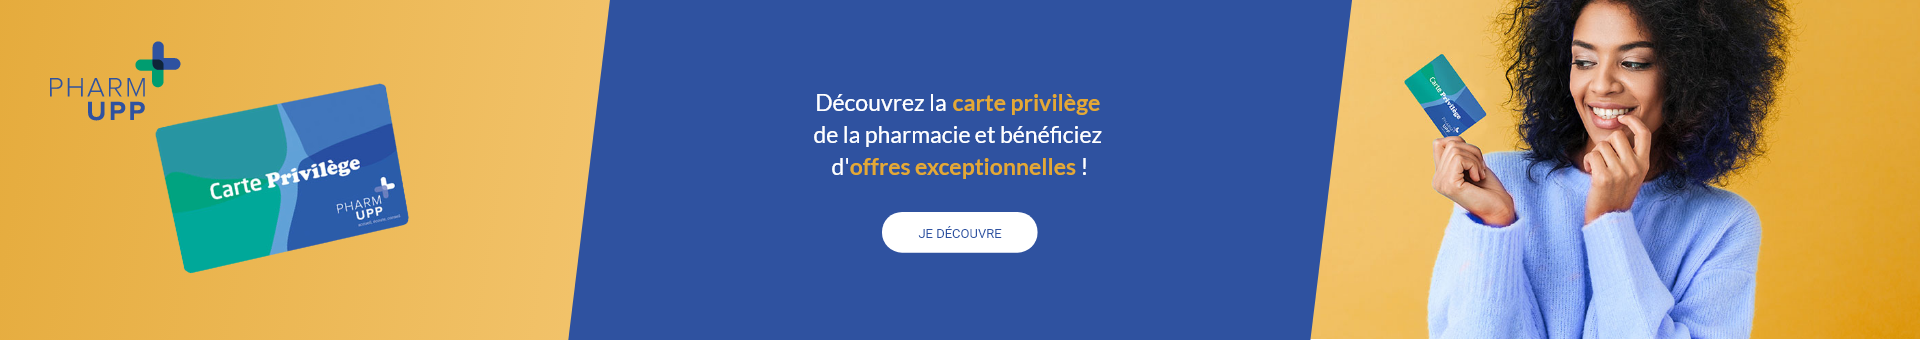 Pharmacie Michel-Petit,DELLE